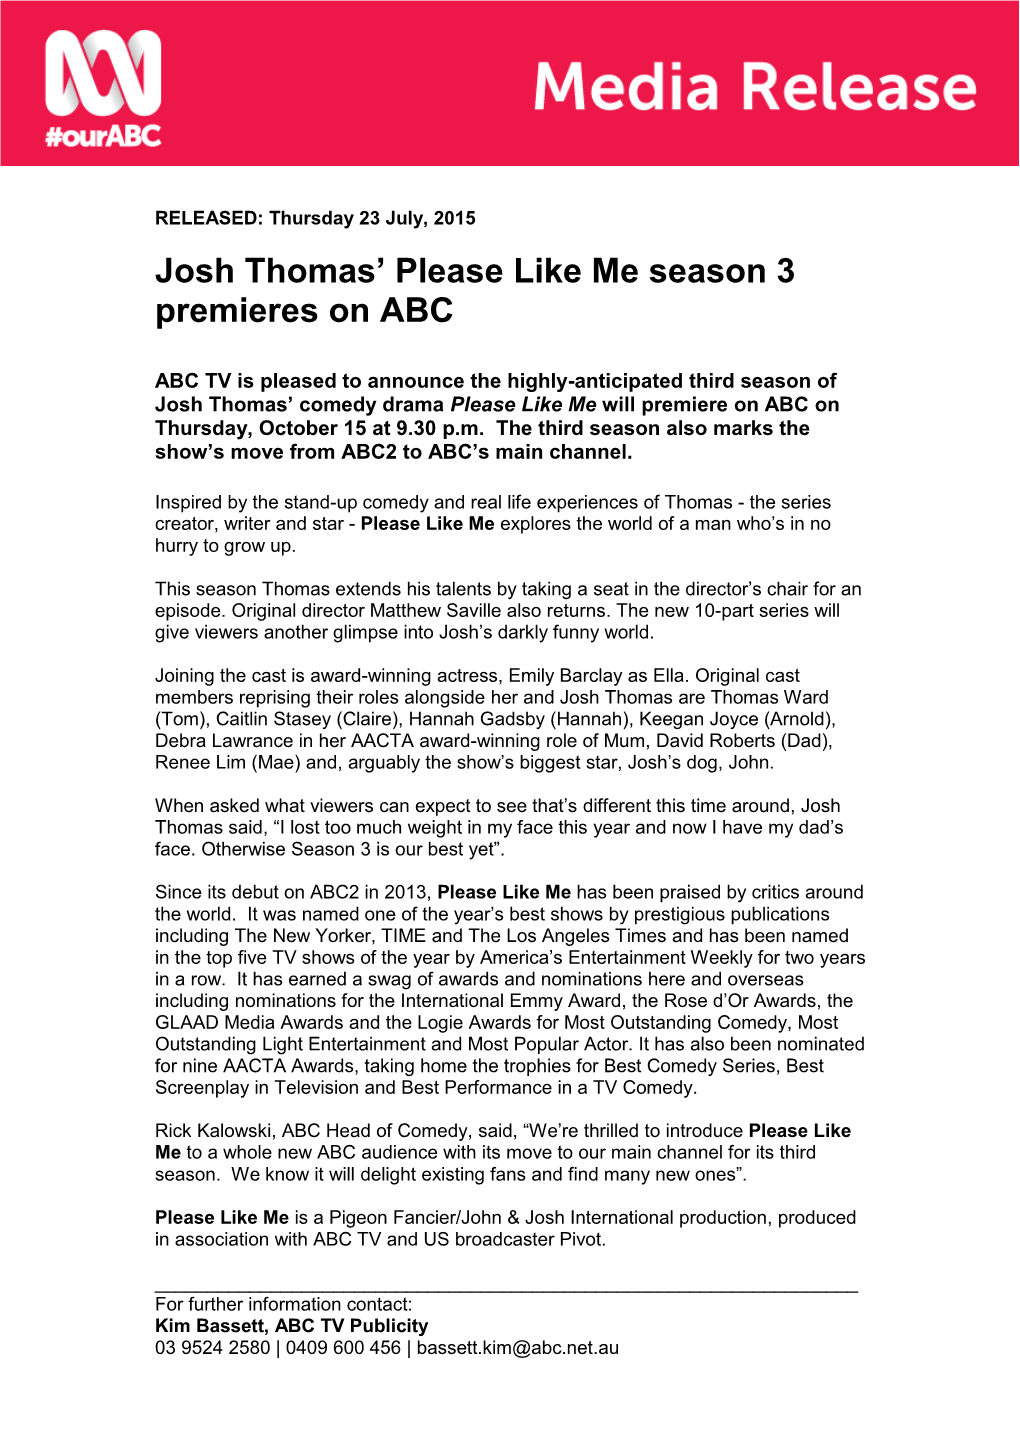 Josh Thomas' Please Like Me Season 3 Premieres On